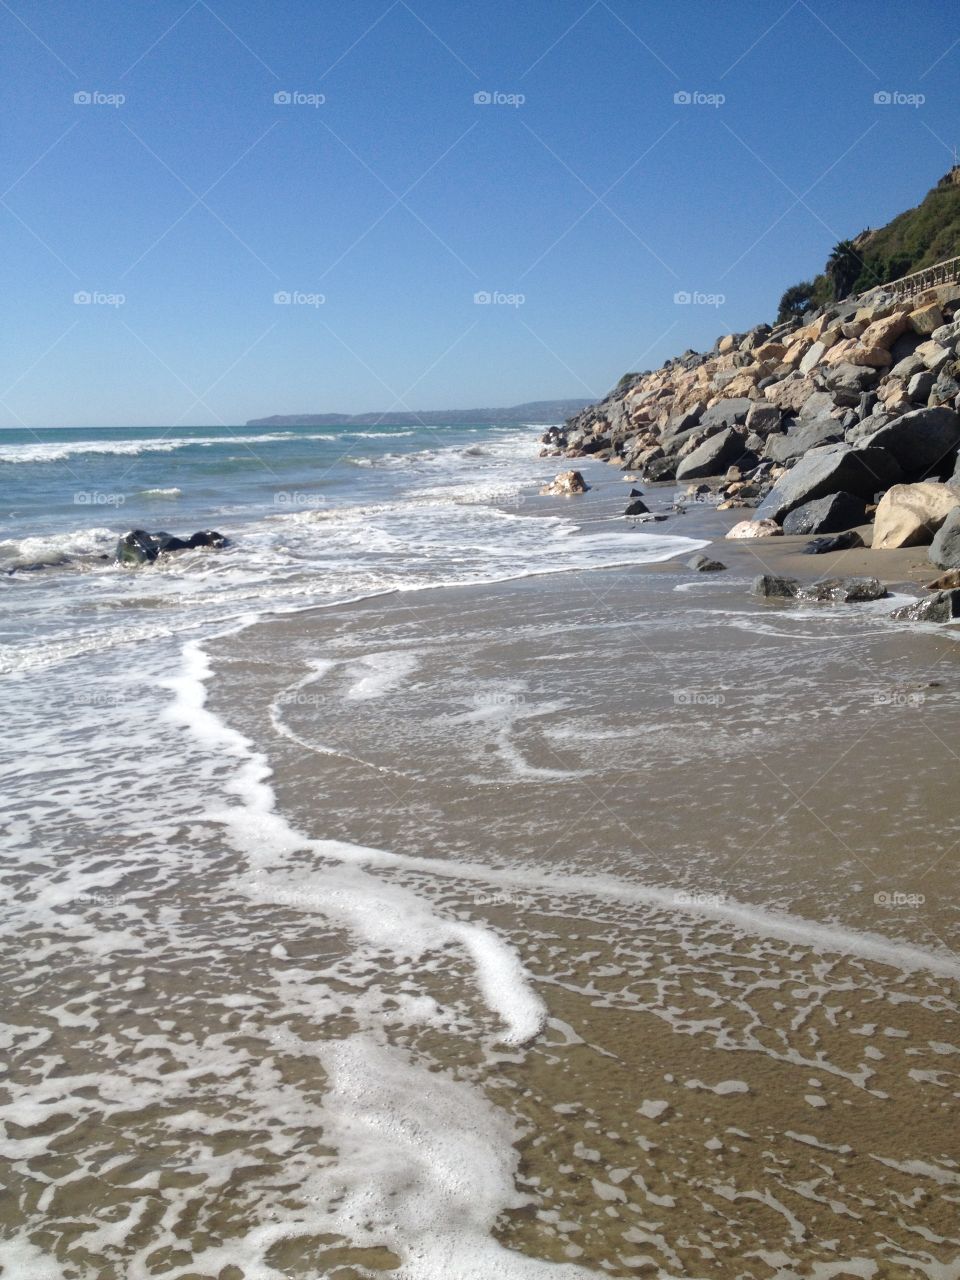 San Clemente, CA. A long awaited walk on the beach.